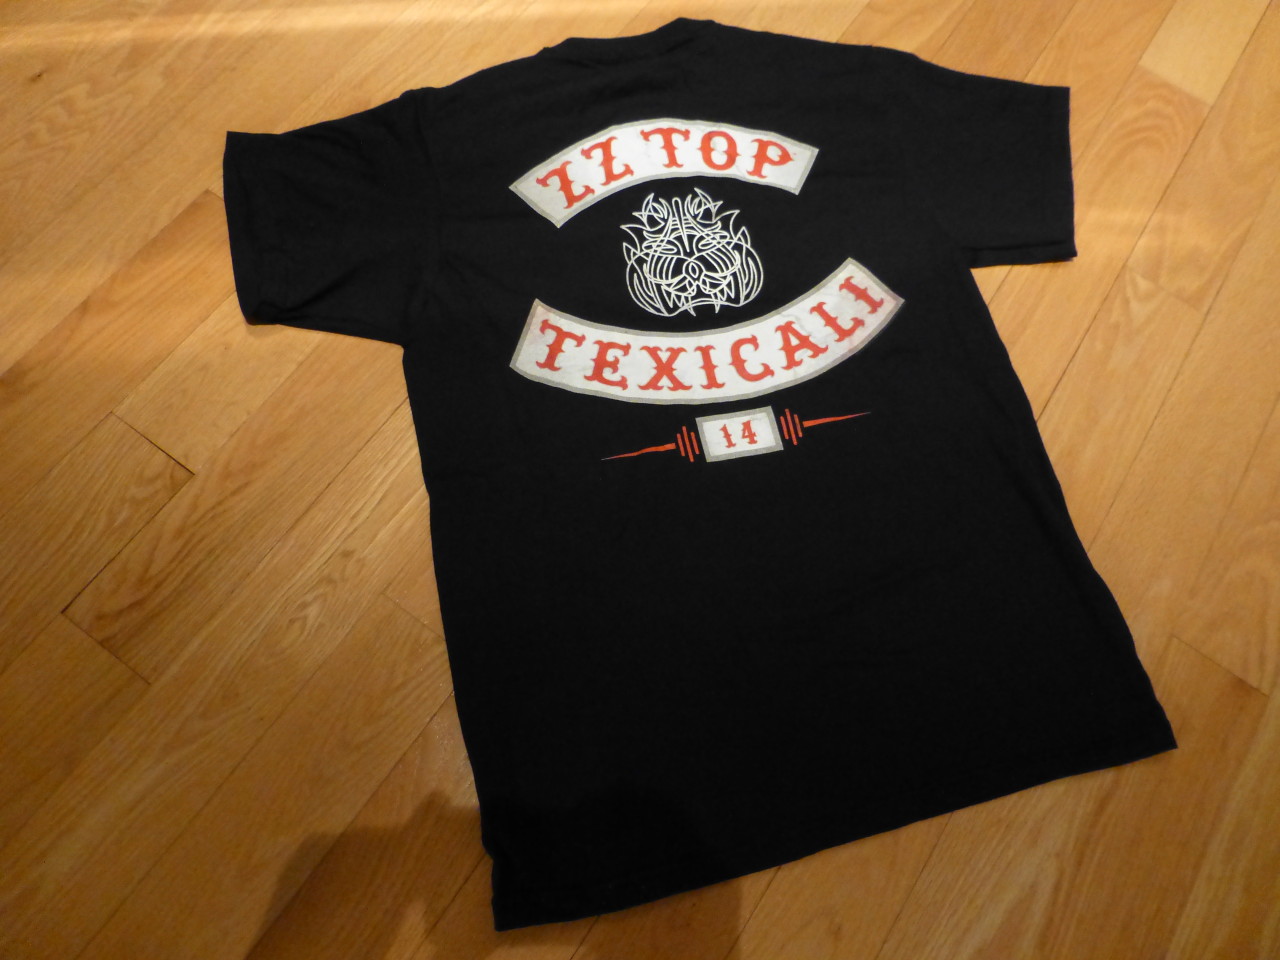 ZZ Top Texicali 14 T-Shirt